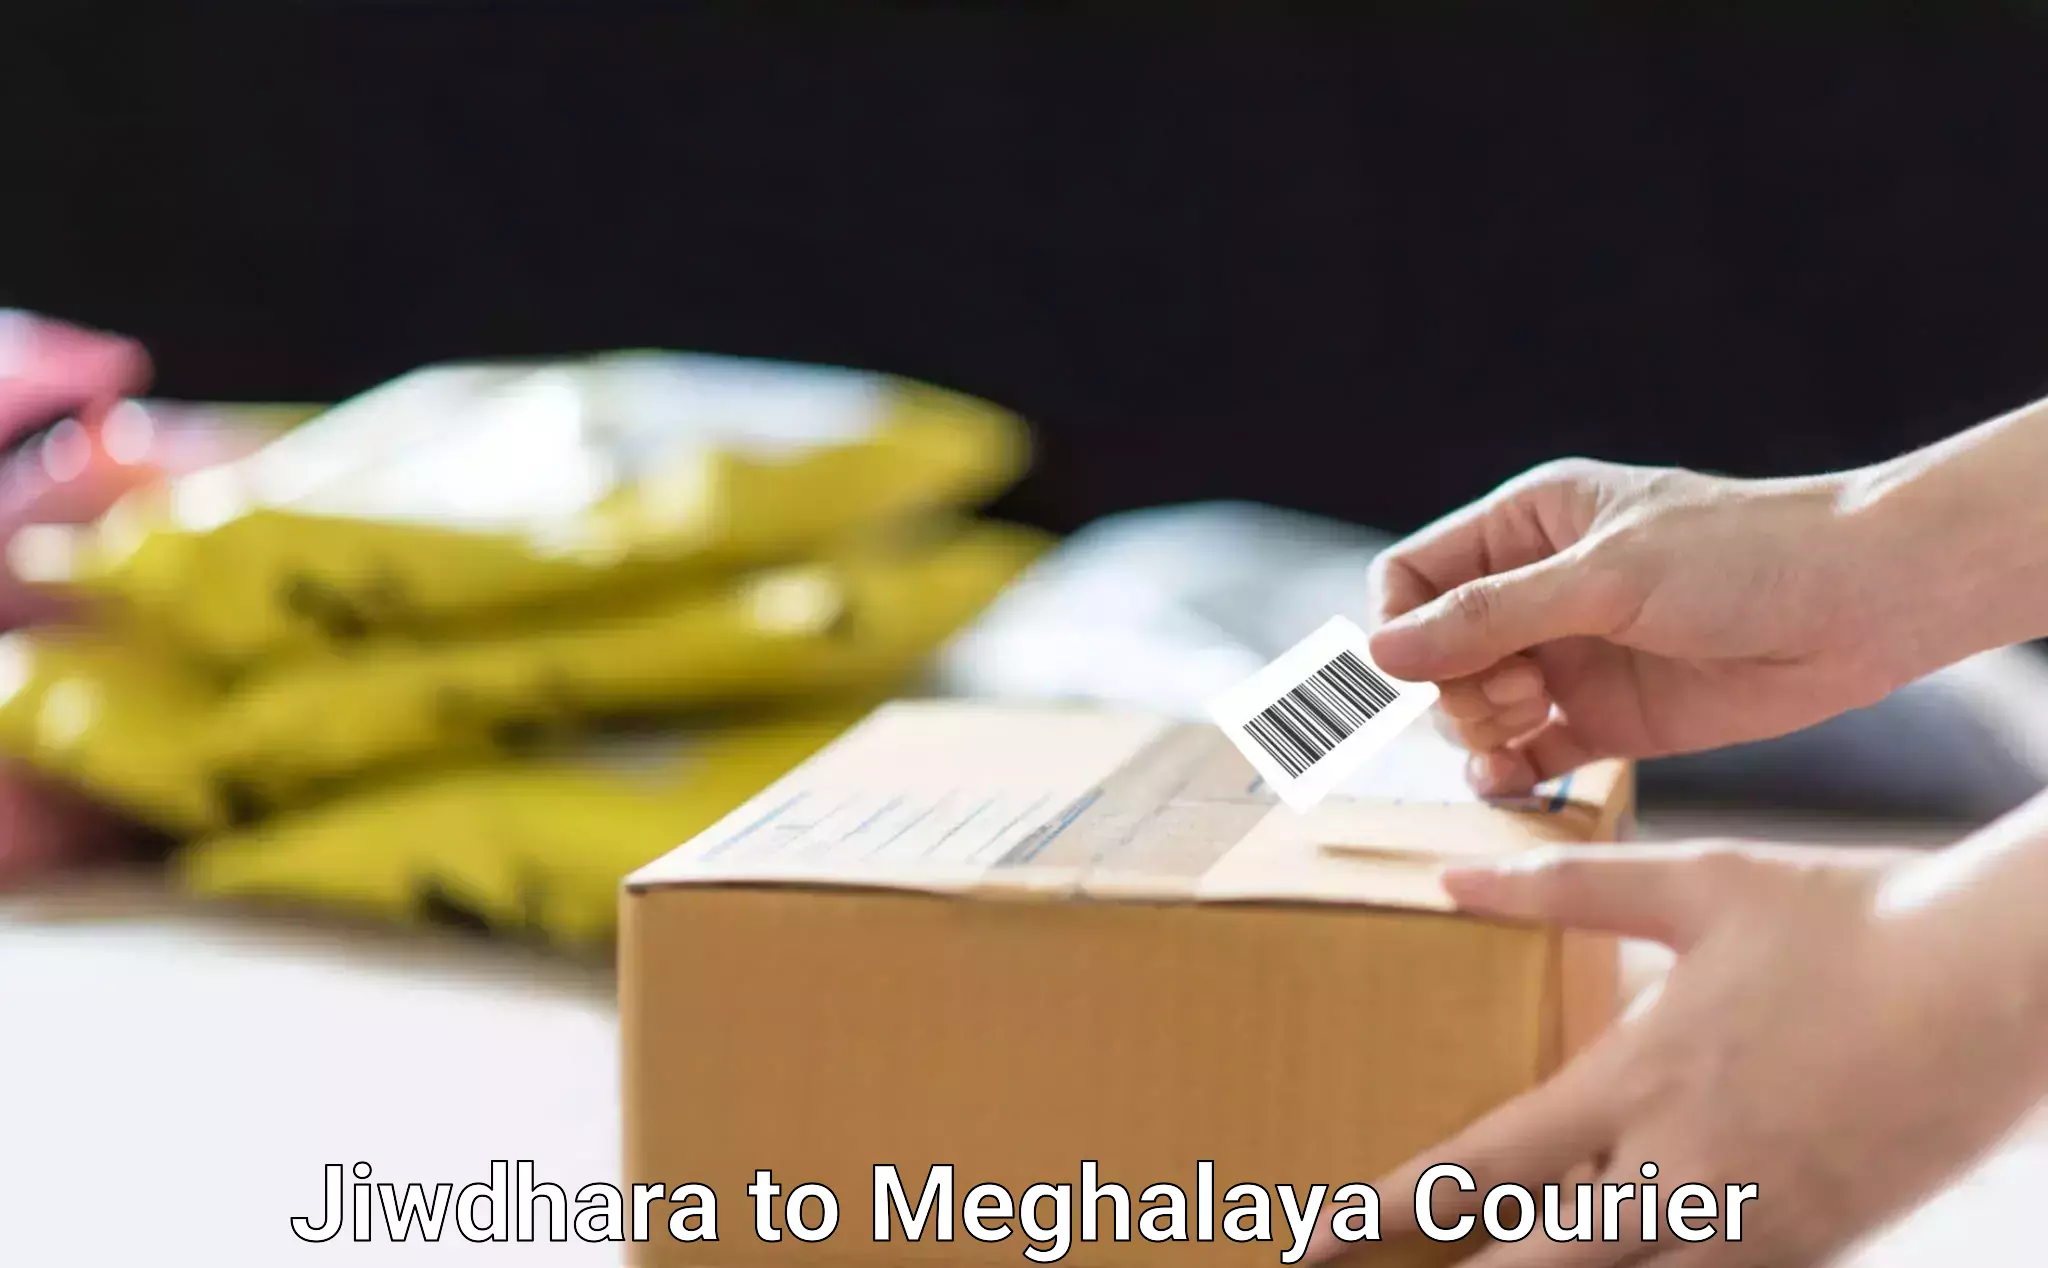 Furniture moving specialists Jiwdhara to Meghalaya